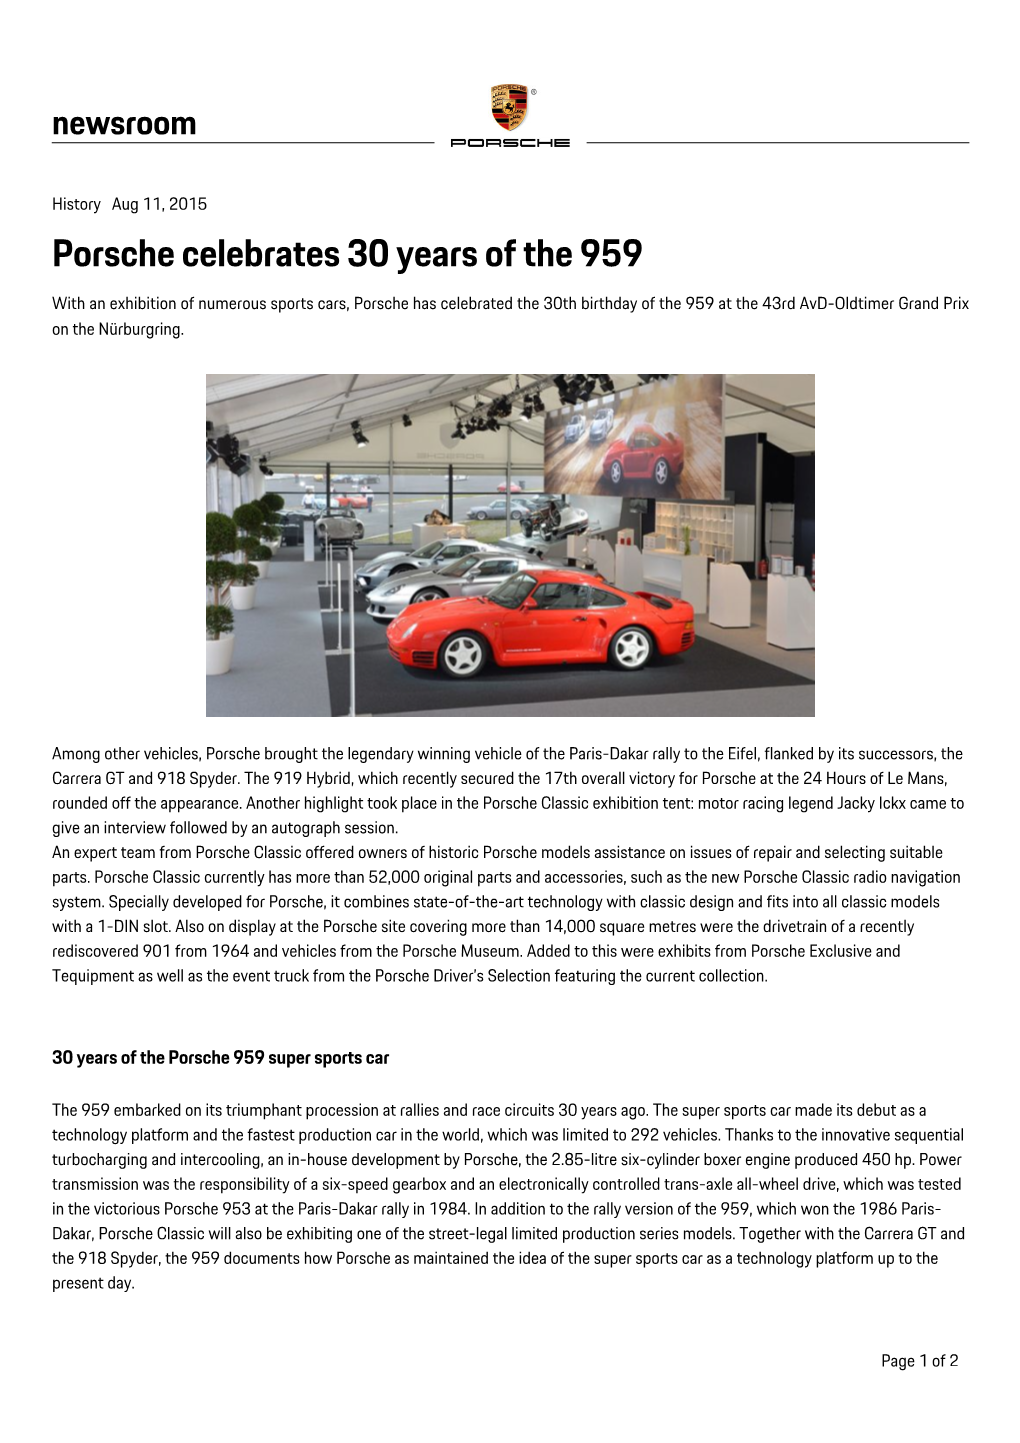 Porsche Celebrates 30 Years of The